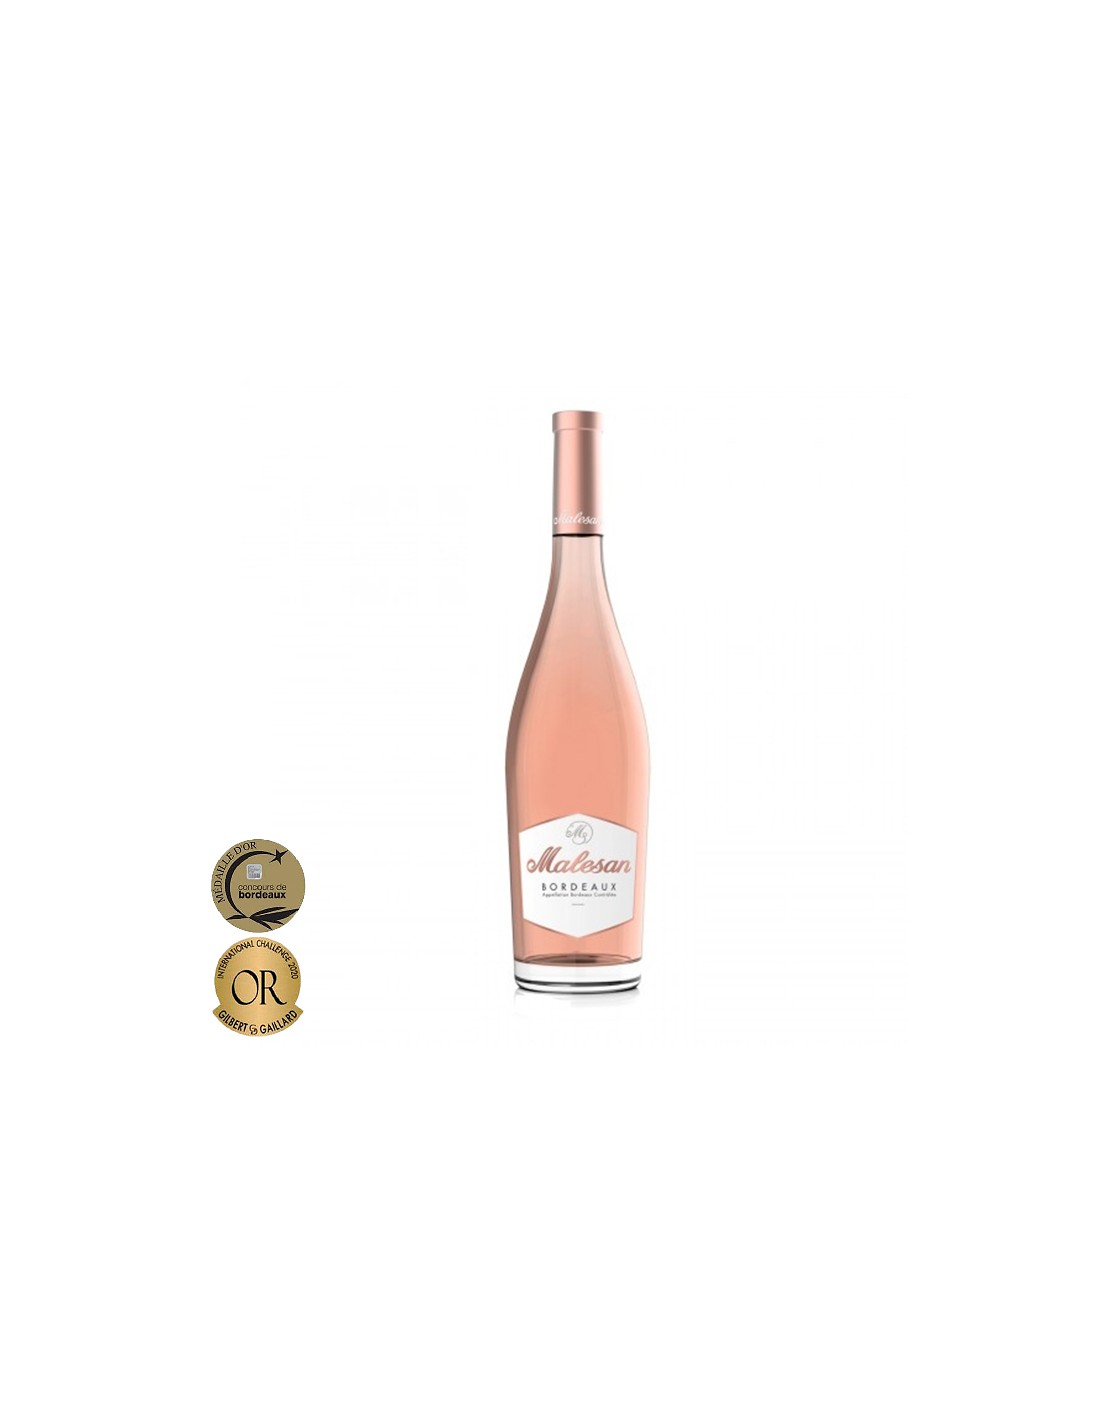 Vin roze sec, Cupaj, Malesan Bordeaux, 12.5% alc., 0.75L, Franta alcooldiscount.ro